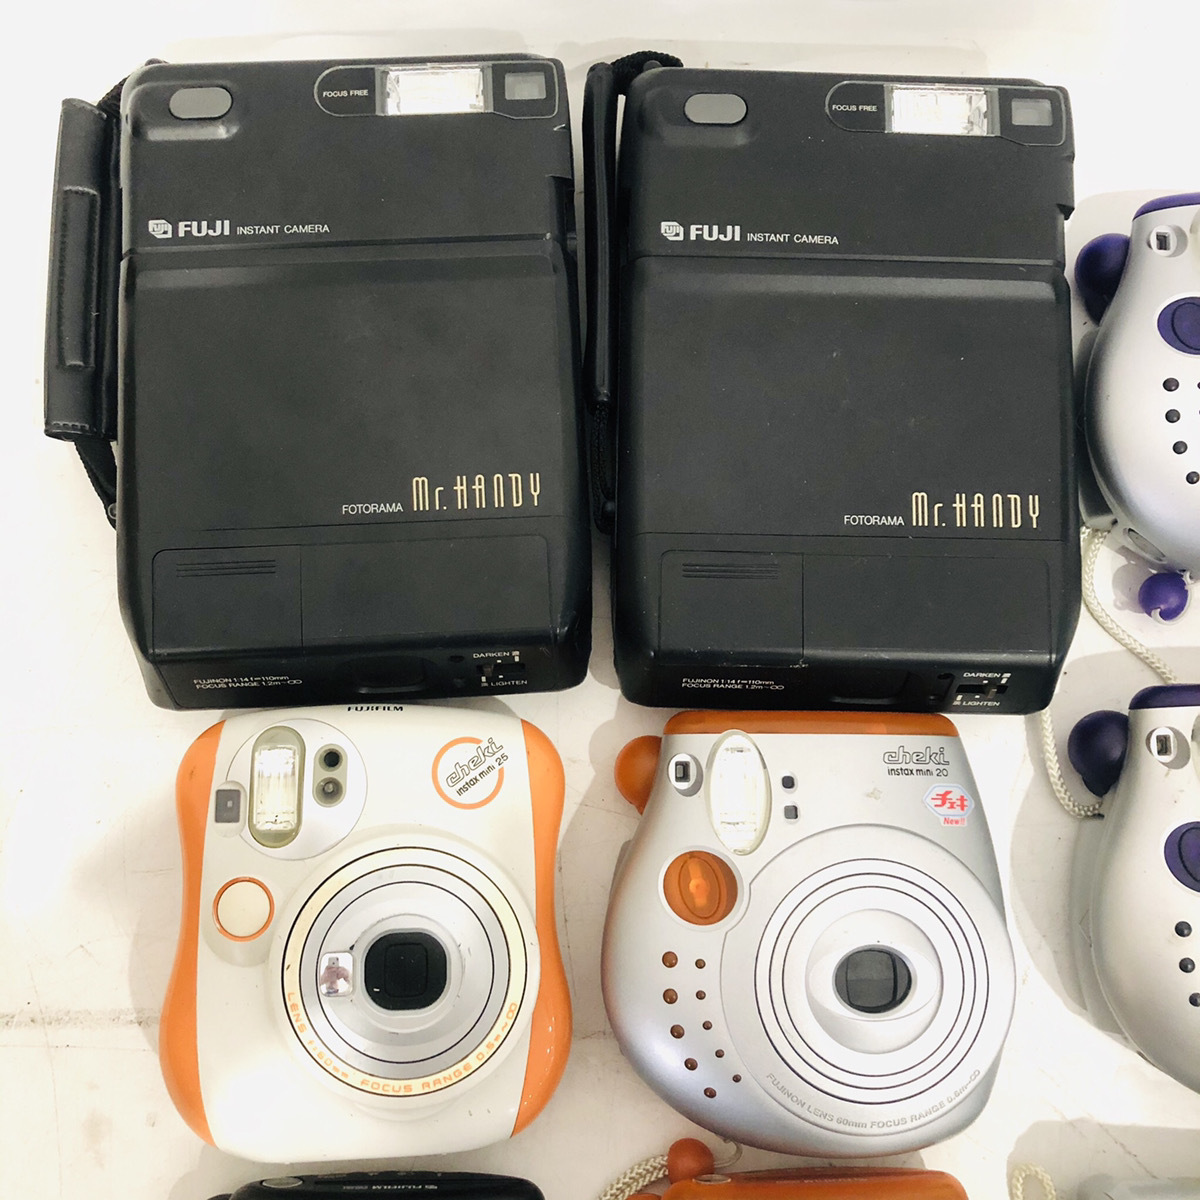 [R1231] good buy Polaroid camera each Manufacturers assortment large amount set sale FUJIFILM Cheki instax mini Mr.HANDY instant camera 